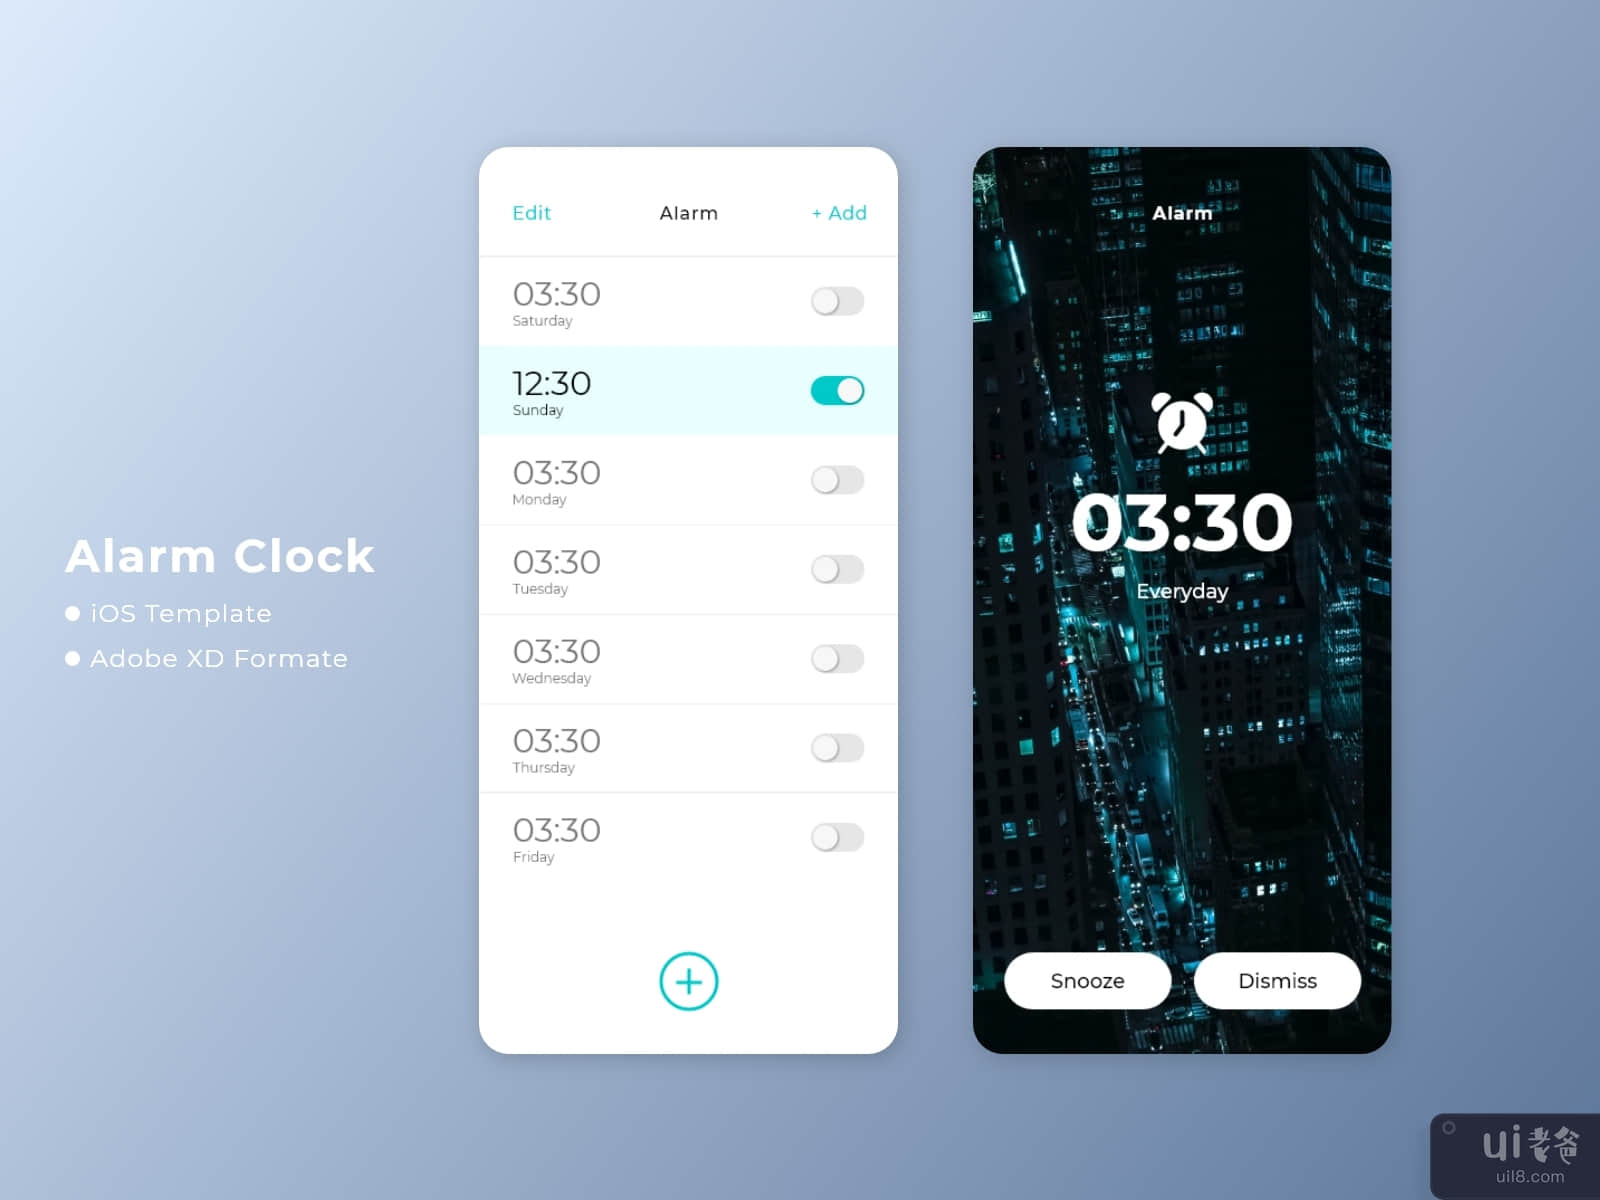 Alarm Clock for iOS